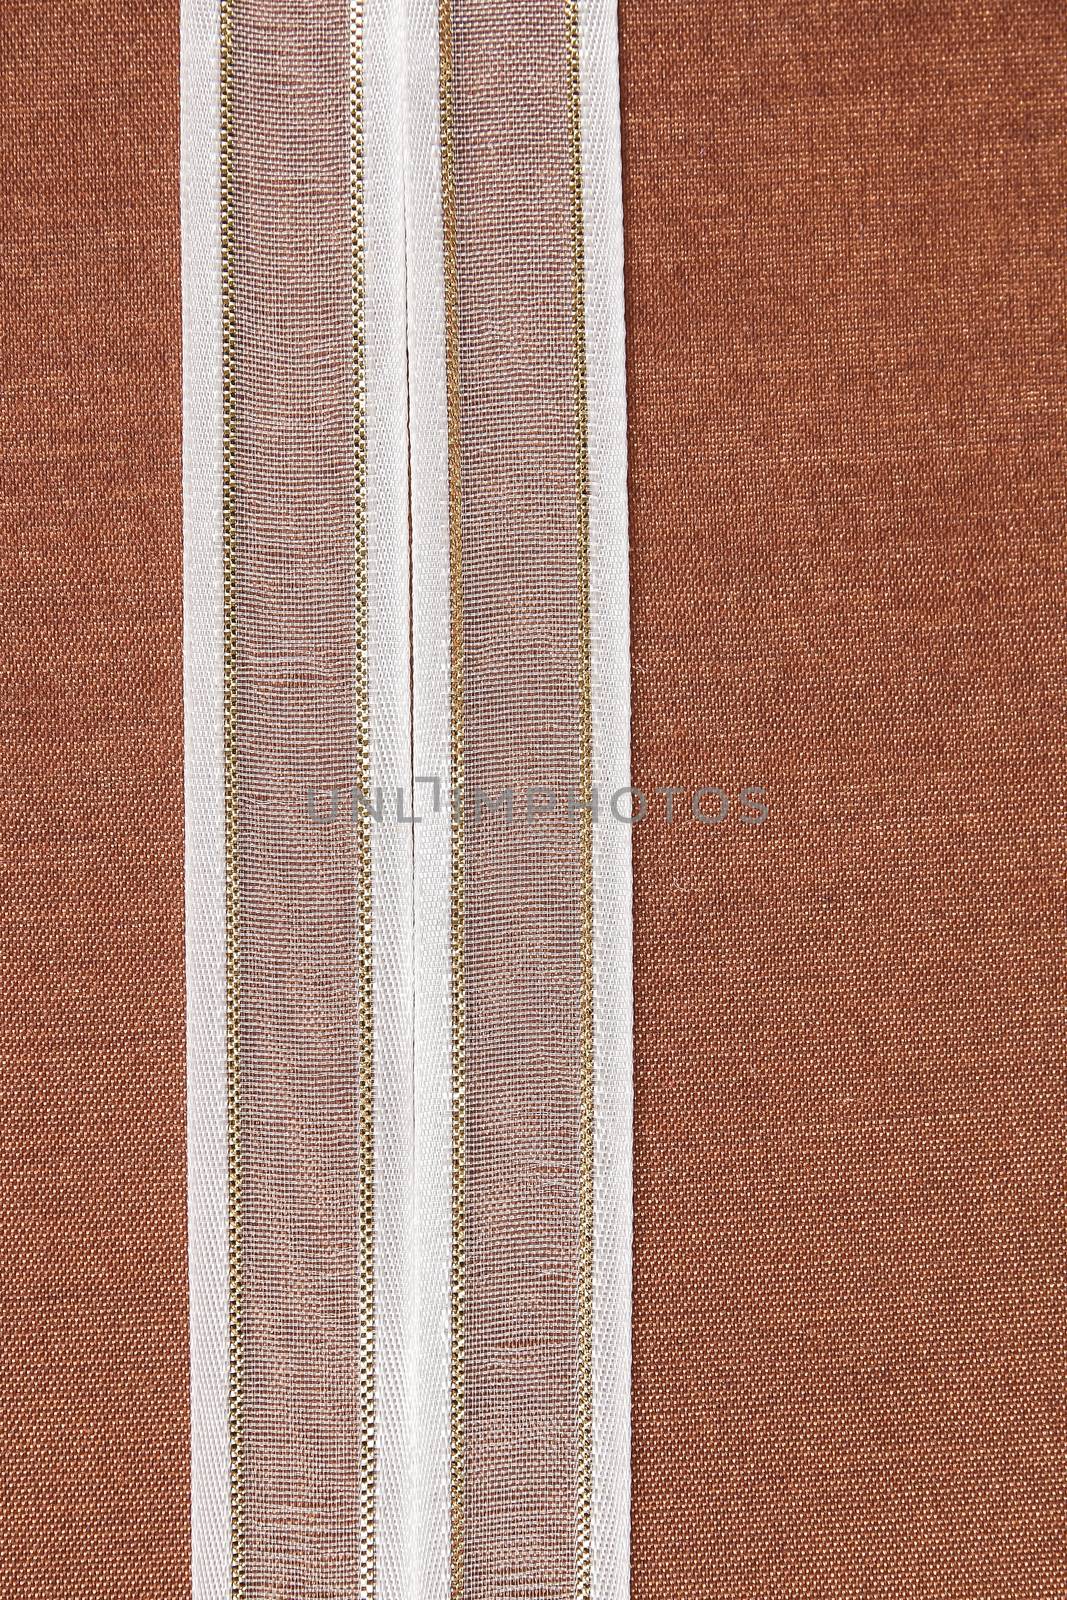 white ribbon on natural cotton, bright cloth fabric background. Retro style